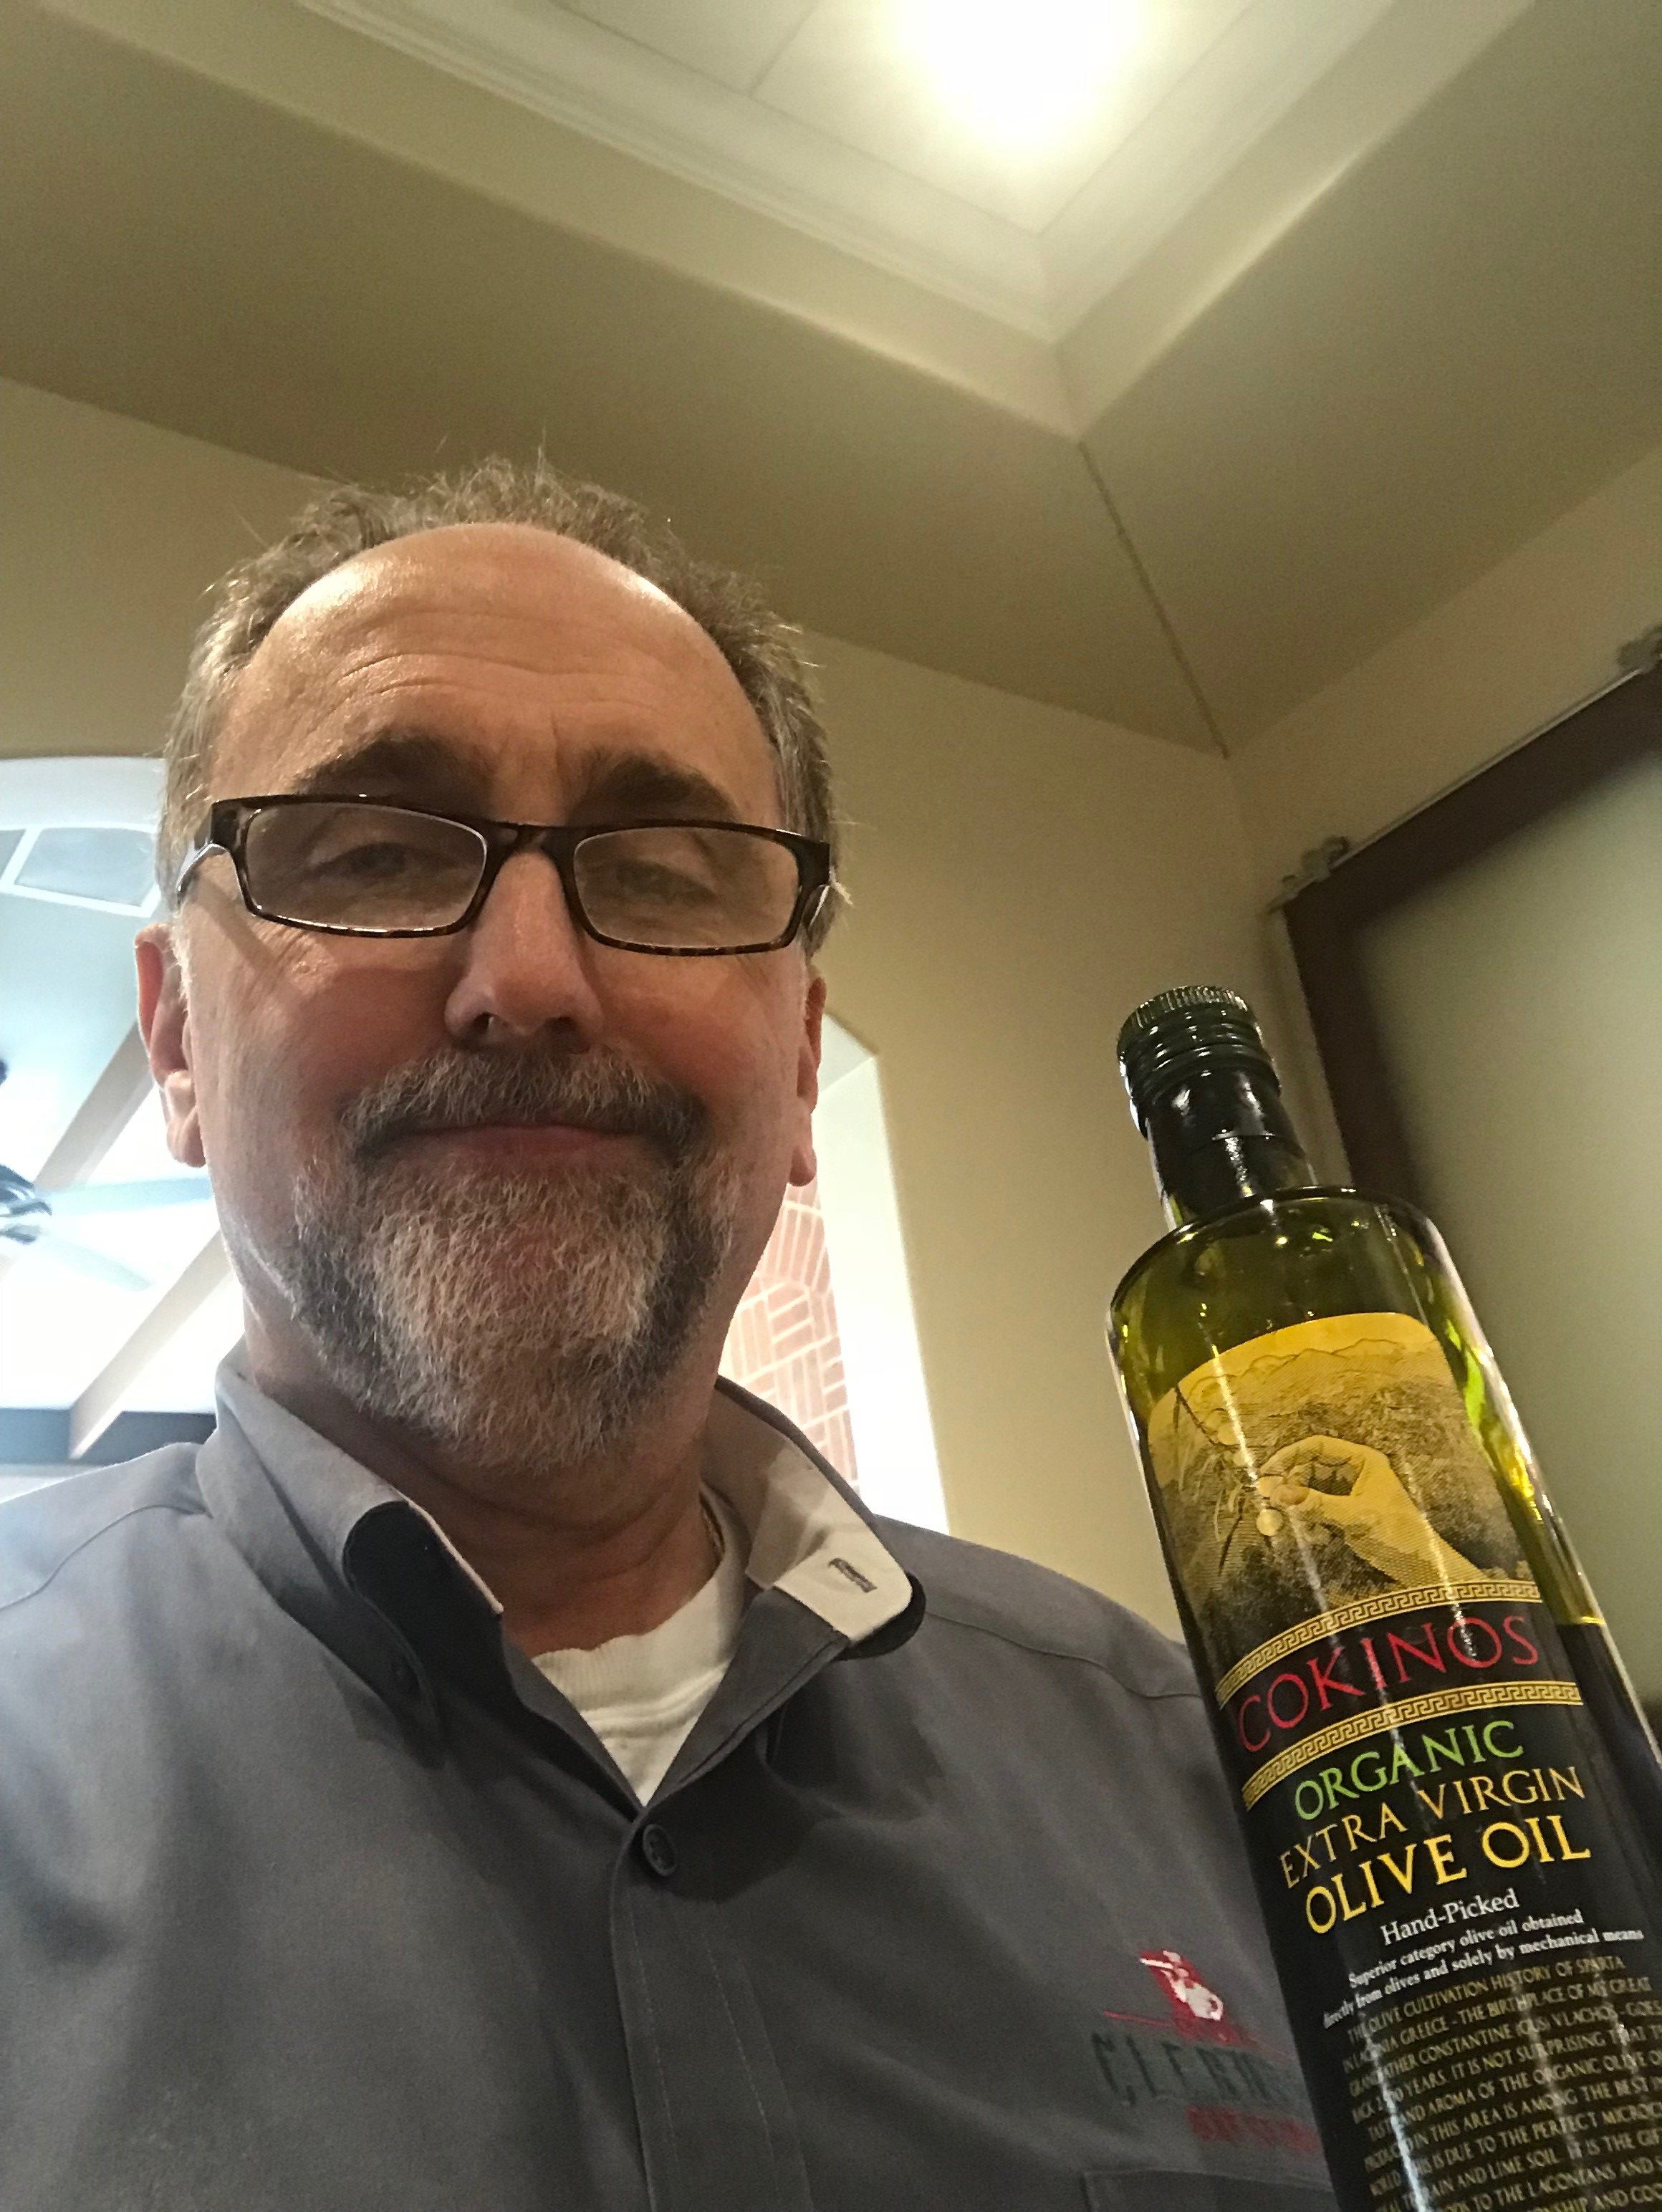 George Mickelis with Cokinos Olive Oil